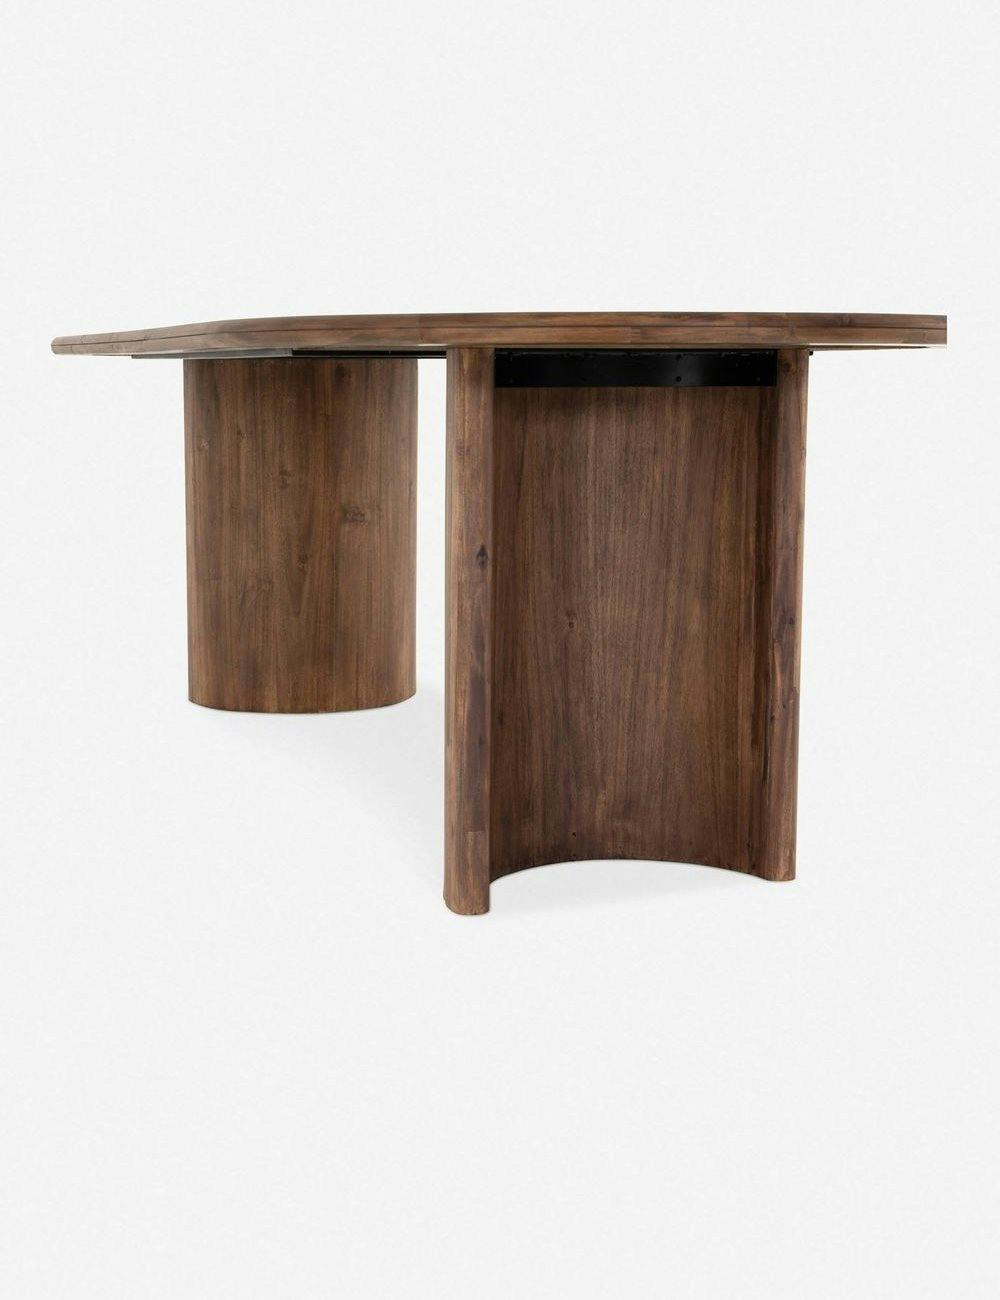 Gilda 94" Brown Acacia Wood Oval Dining Table